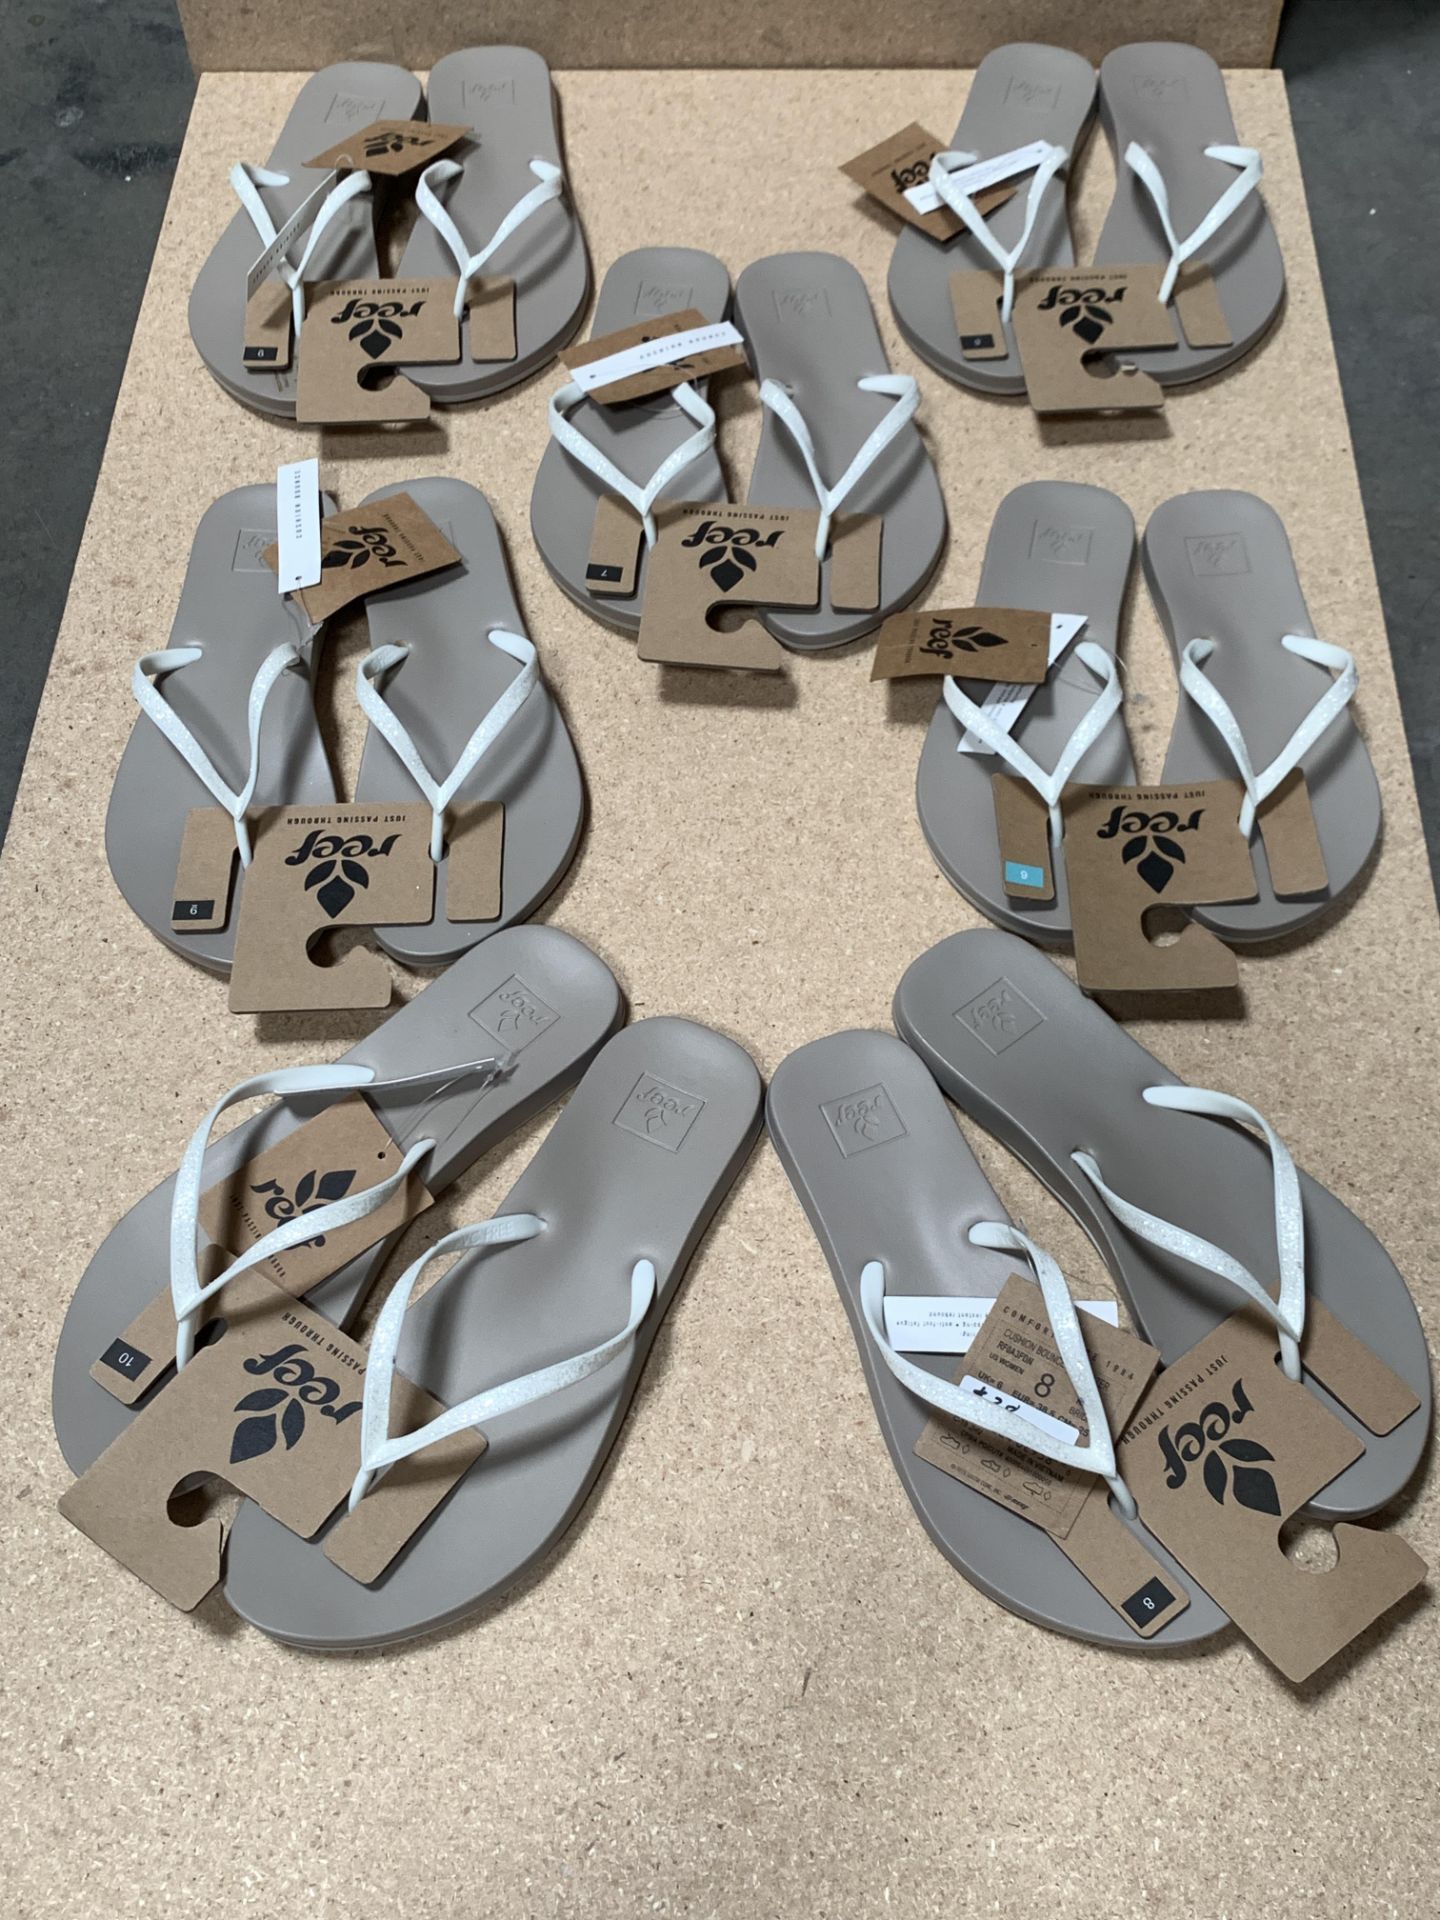 7 Pairs REEF Flip Flop Sandals, Cushion Bounce Stargazer Bridal, New, Various Sizes (Retail $266)